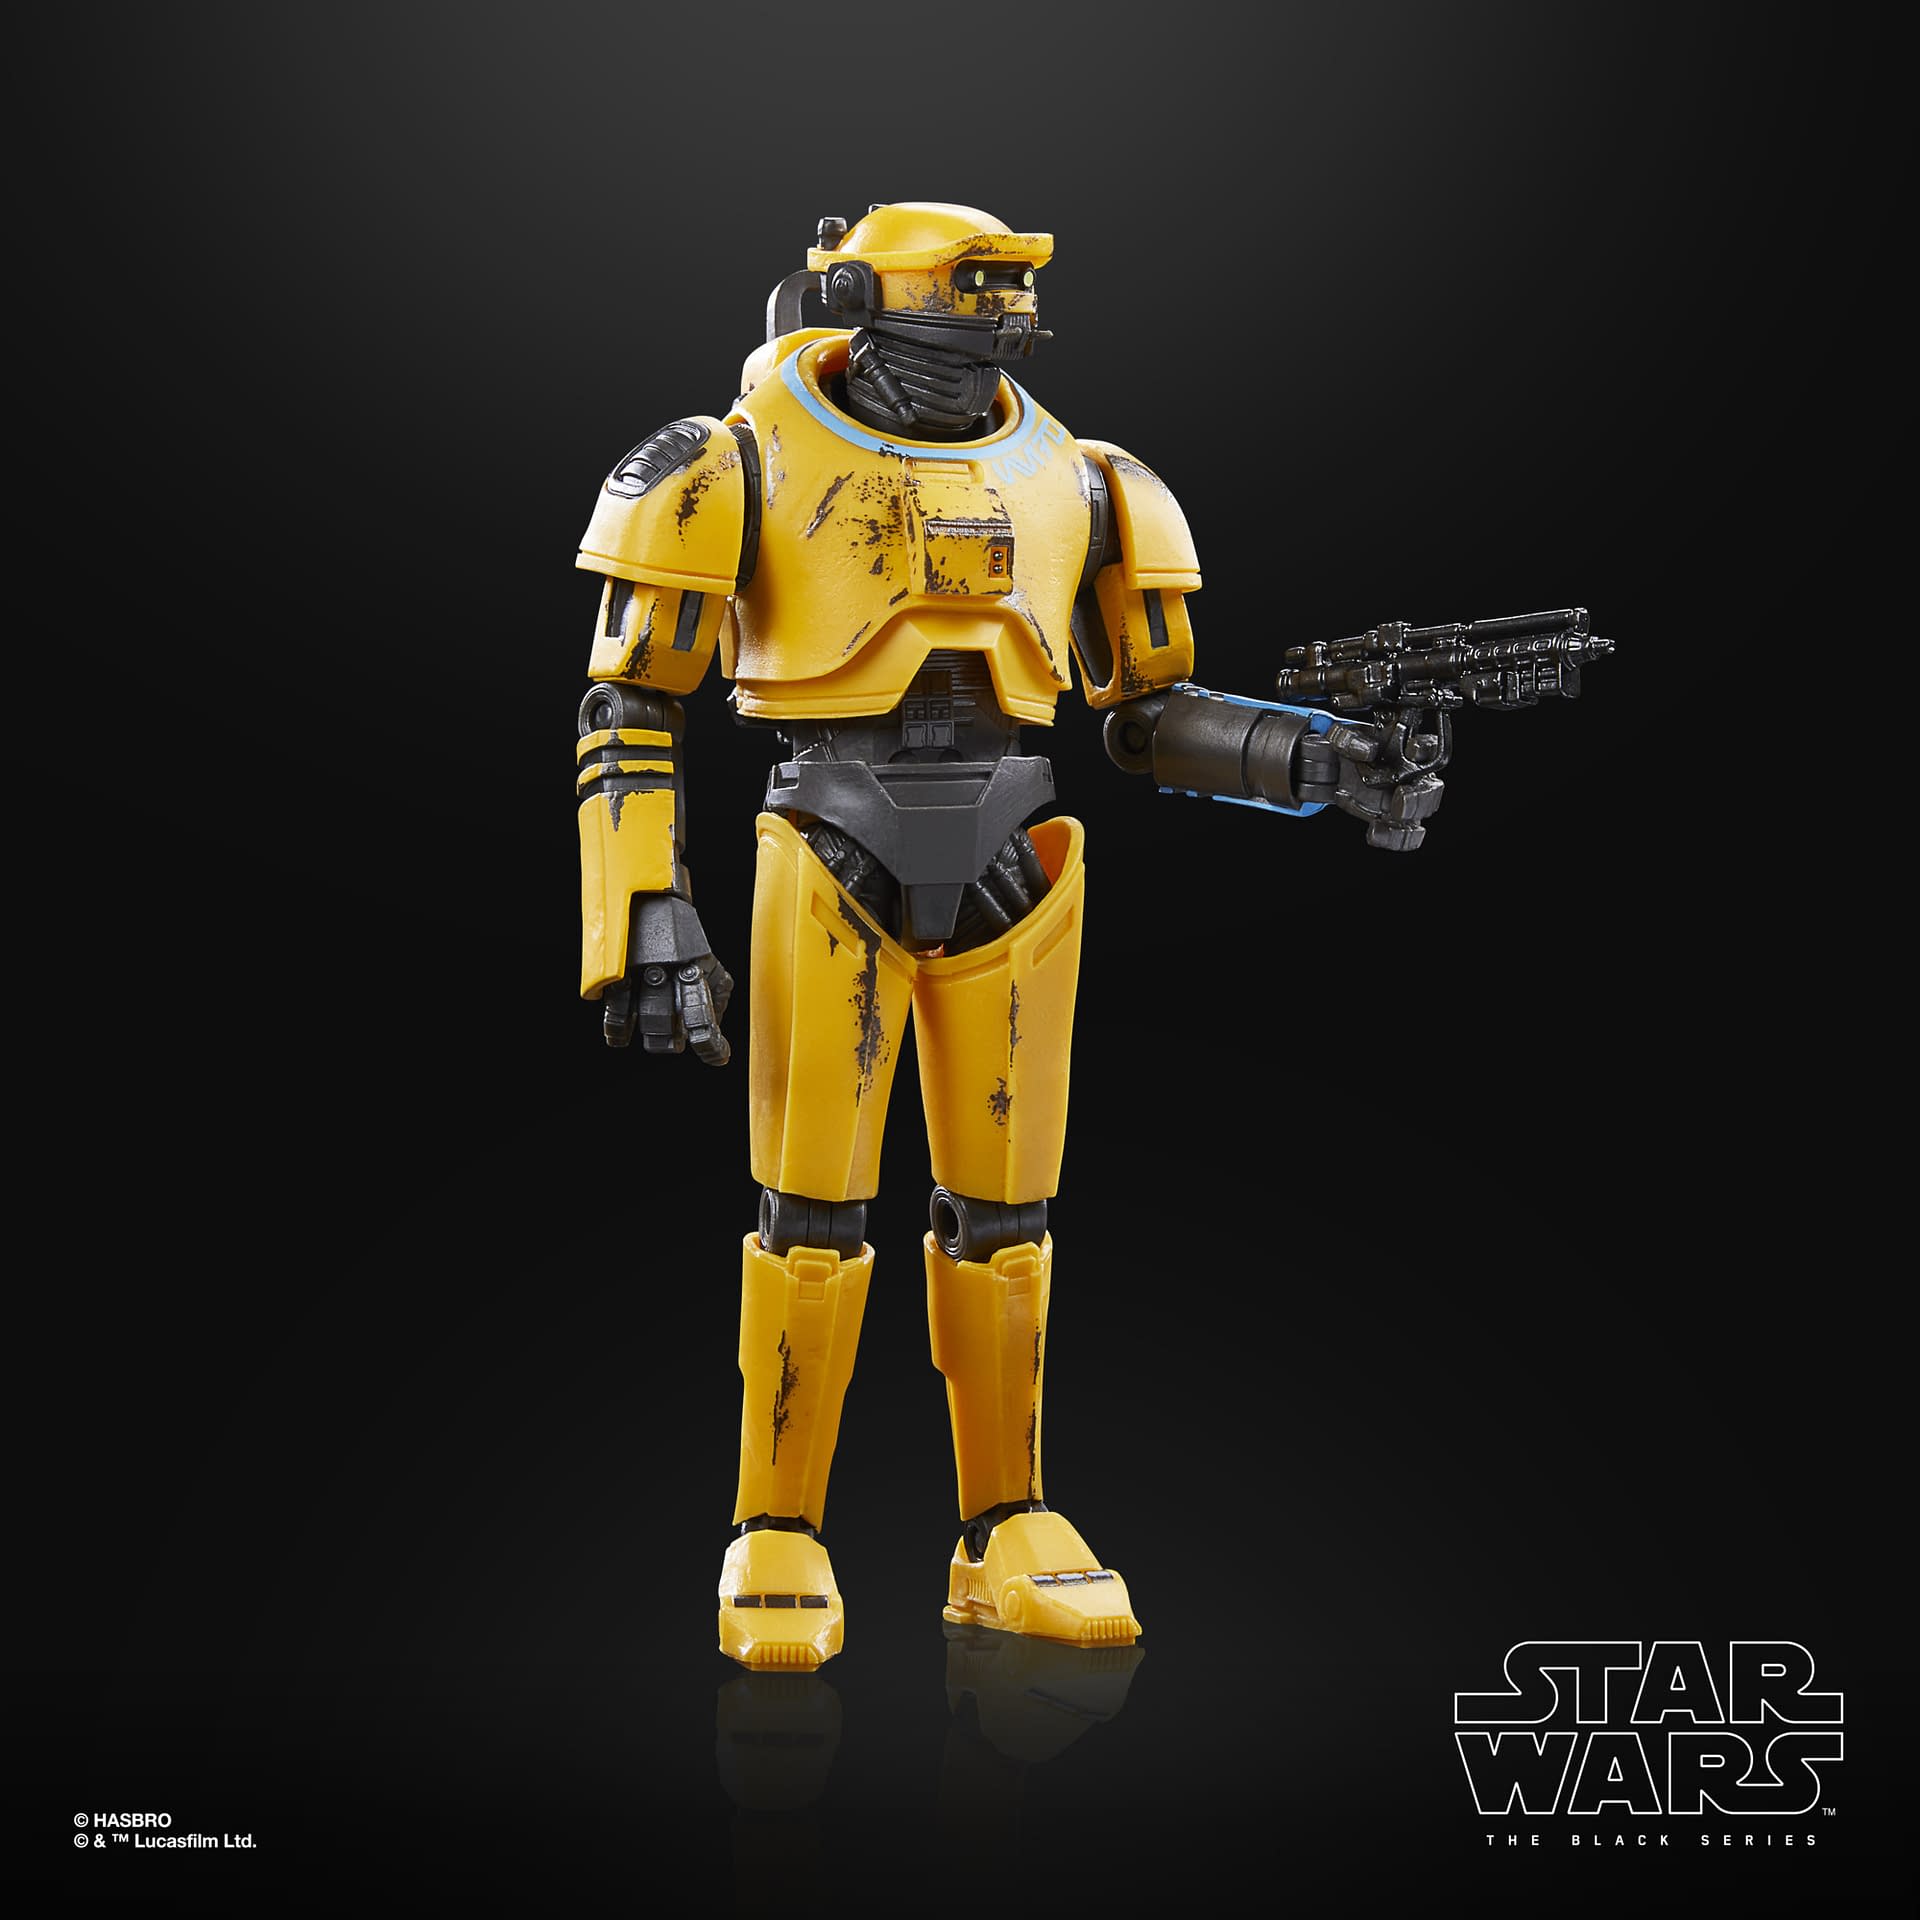 Obi-Wan Kenobi's NED-8 Comes to Hasbro with New Star Wars Figure 